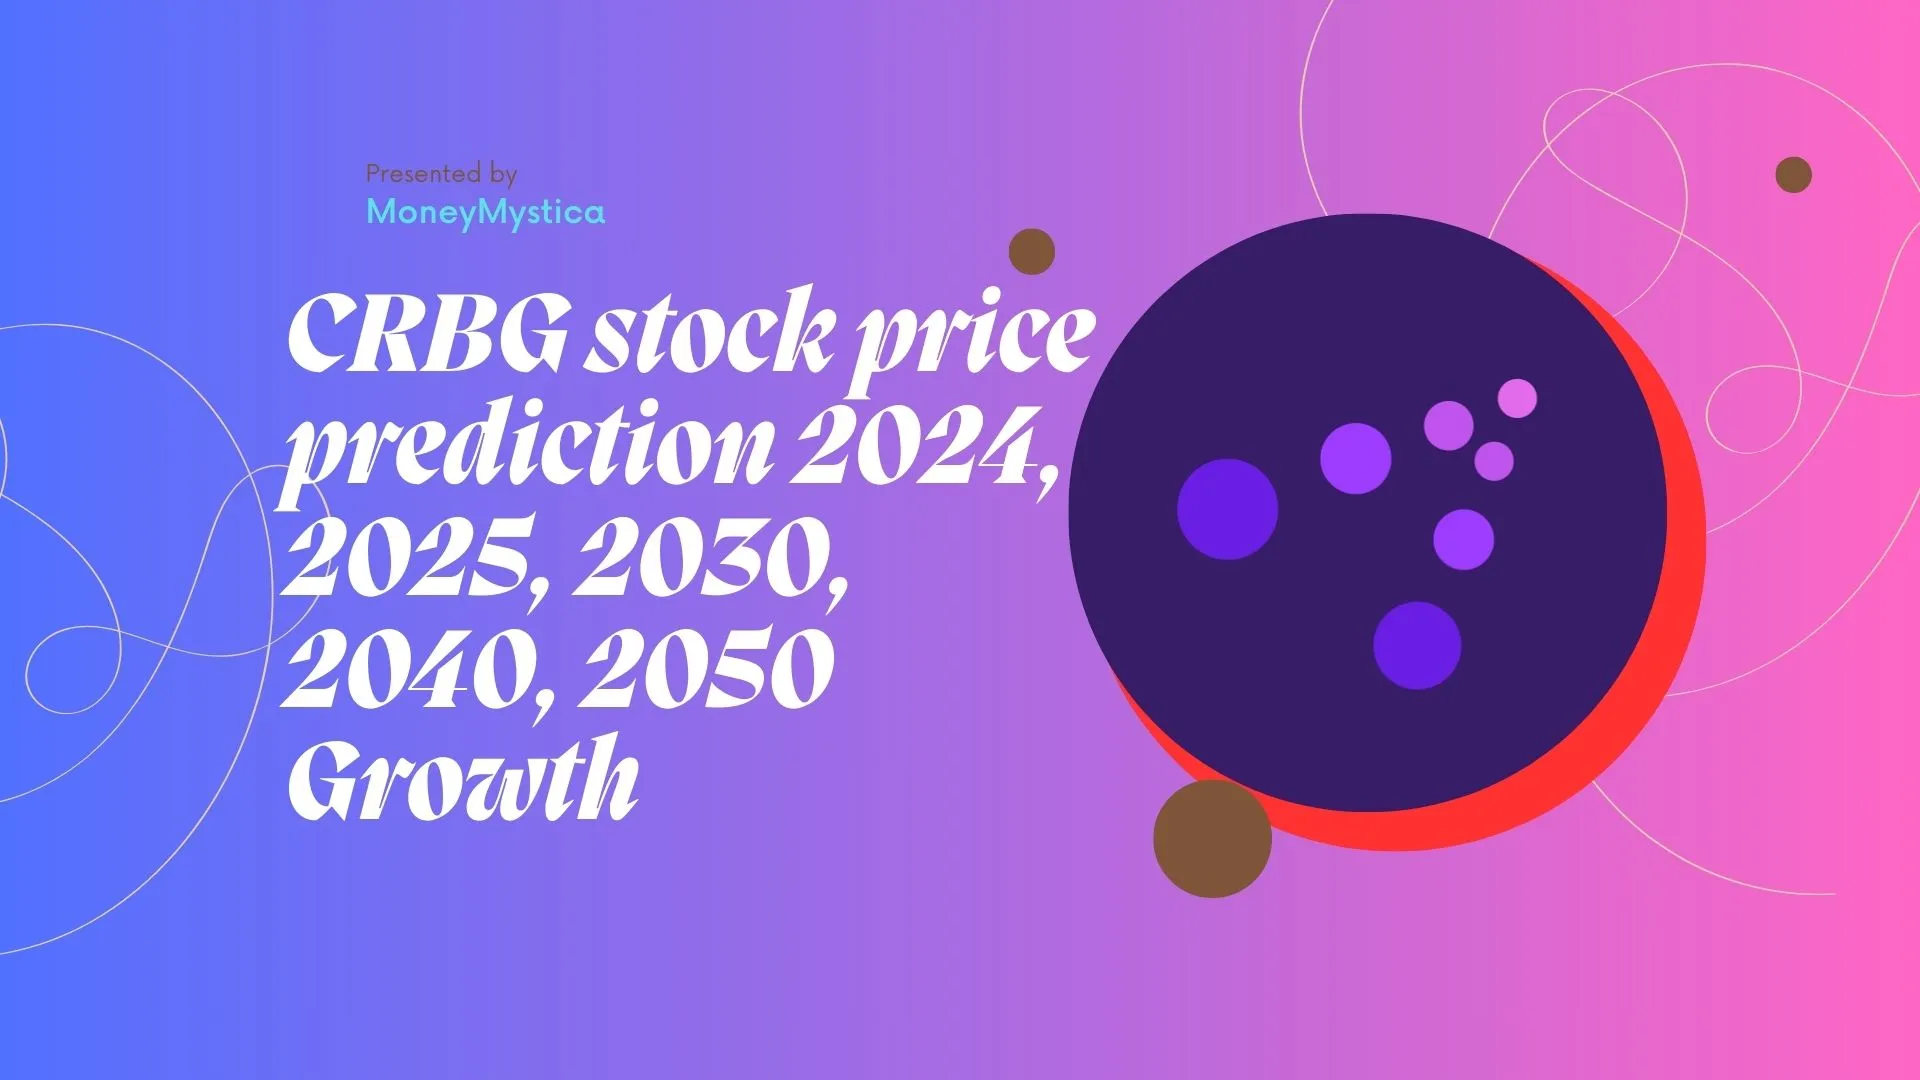 CRBG stock price prediction 2024, 2025, 2030, 2040, 2050 Growth